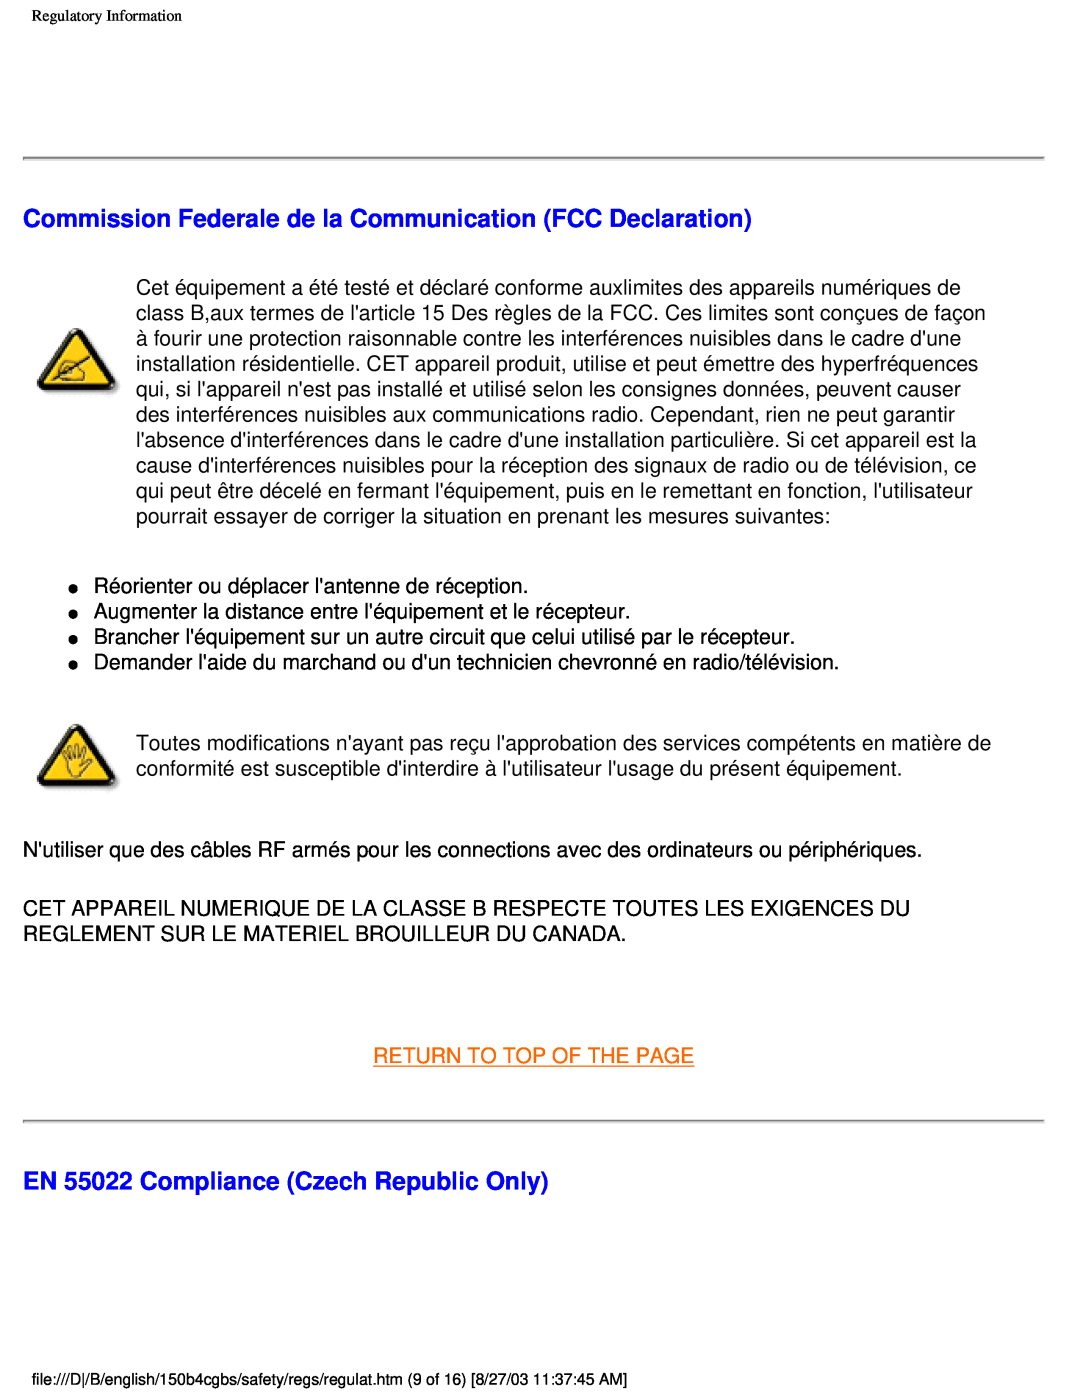 Philips 150B4CB, 150B4CG, 150B4CS user manual EN 55022 Compliance Czech Republic Only, Return To Top Of The Page 